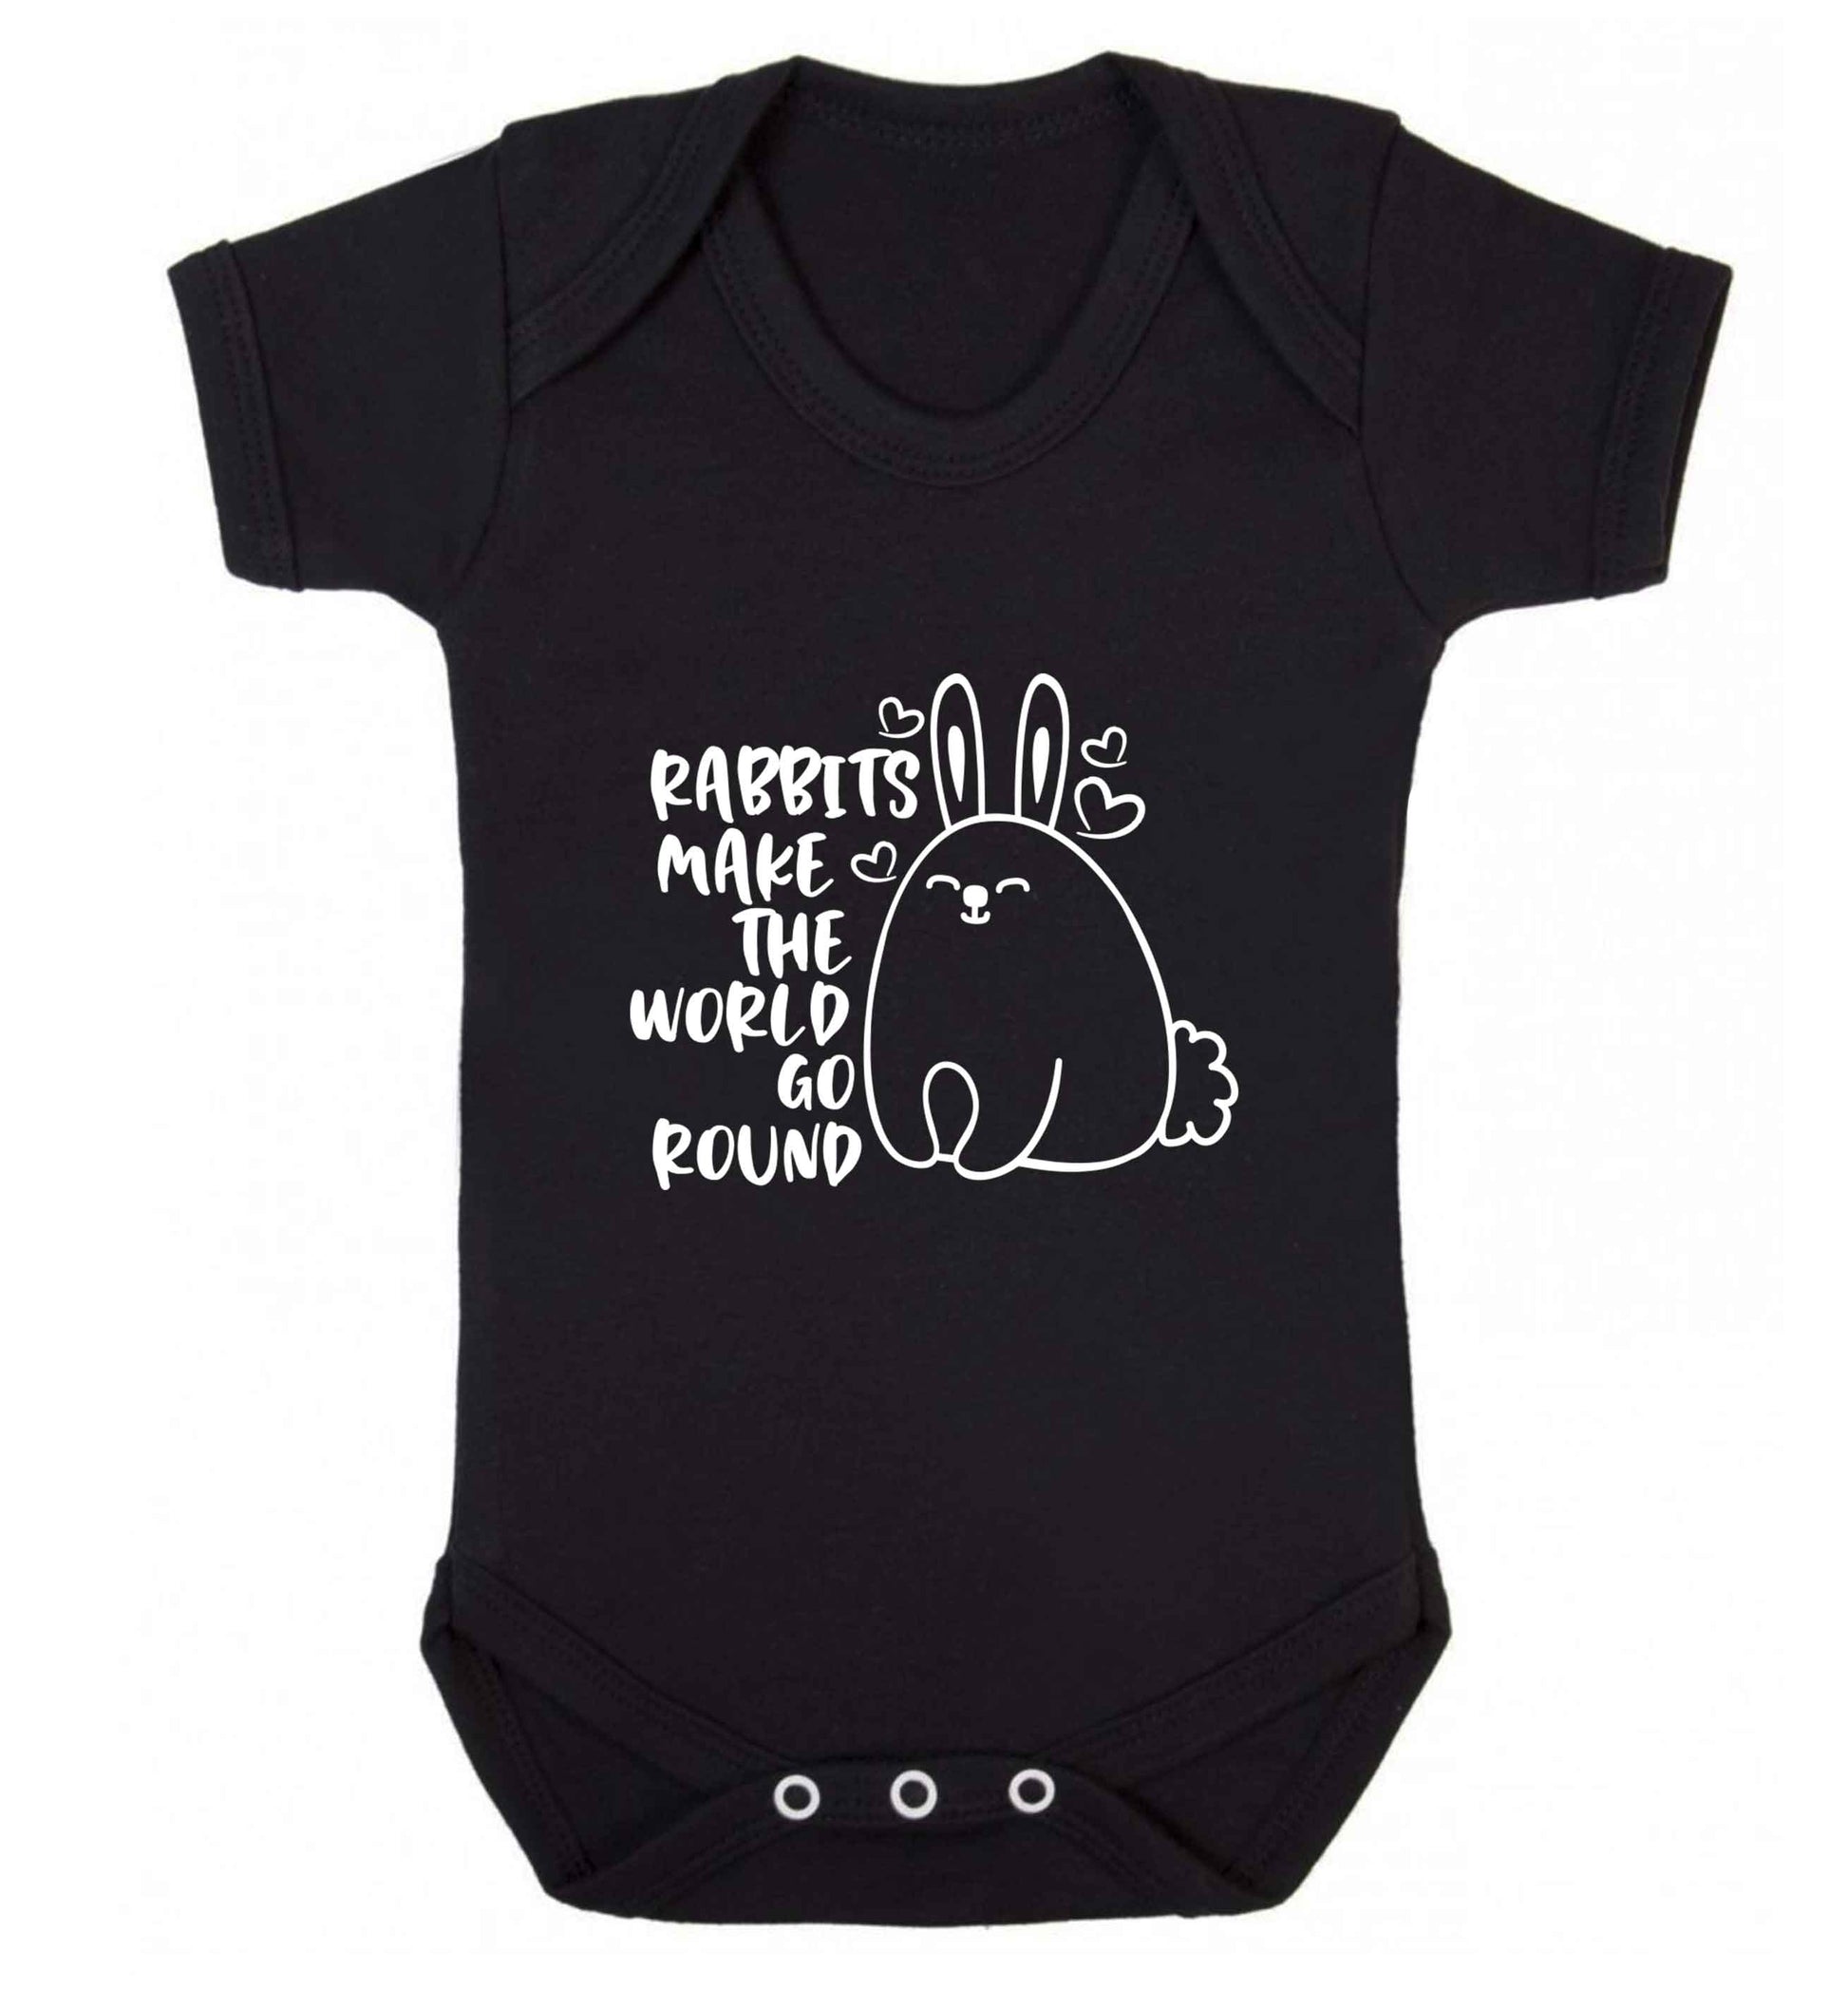 Rabbits make the world go round baby vest black 18-24 months